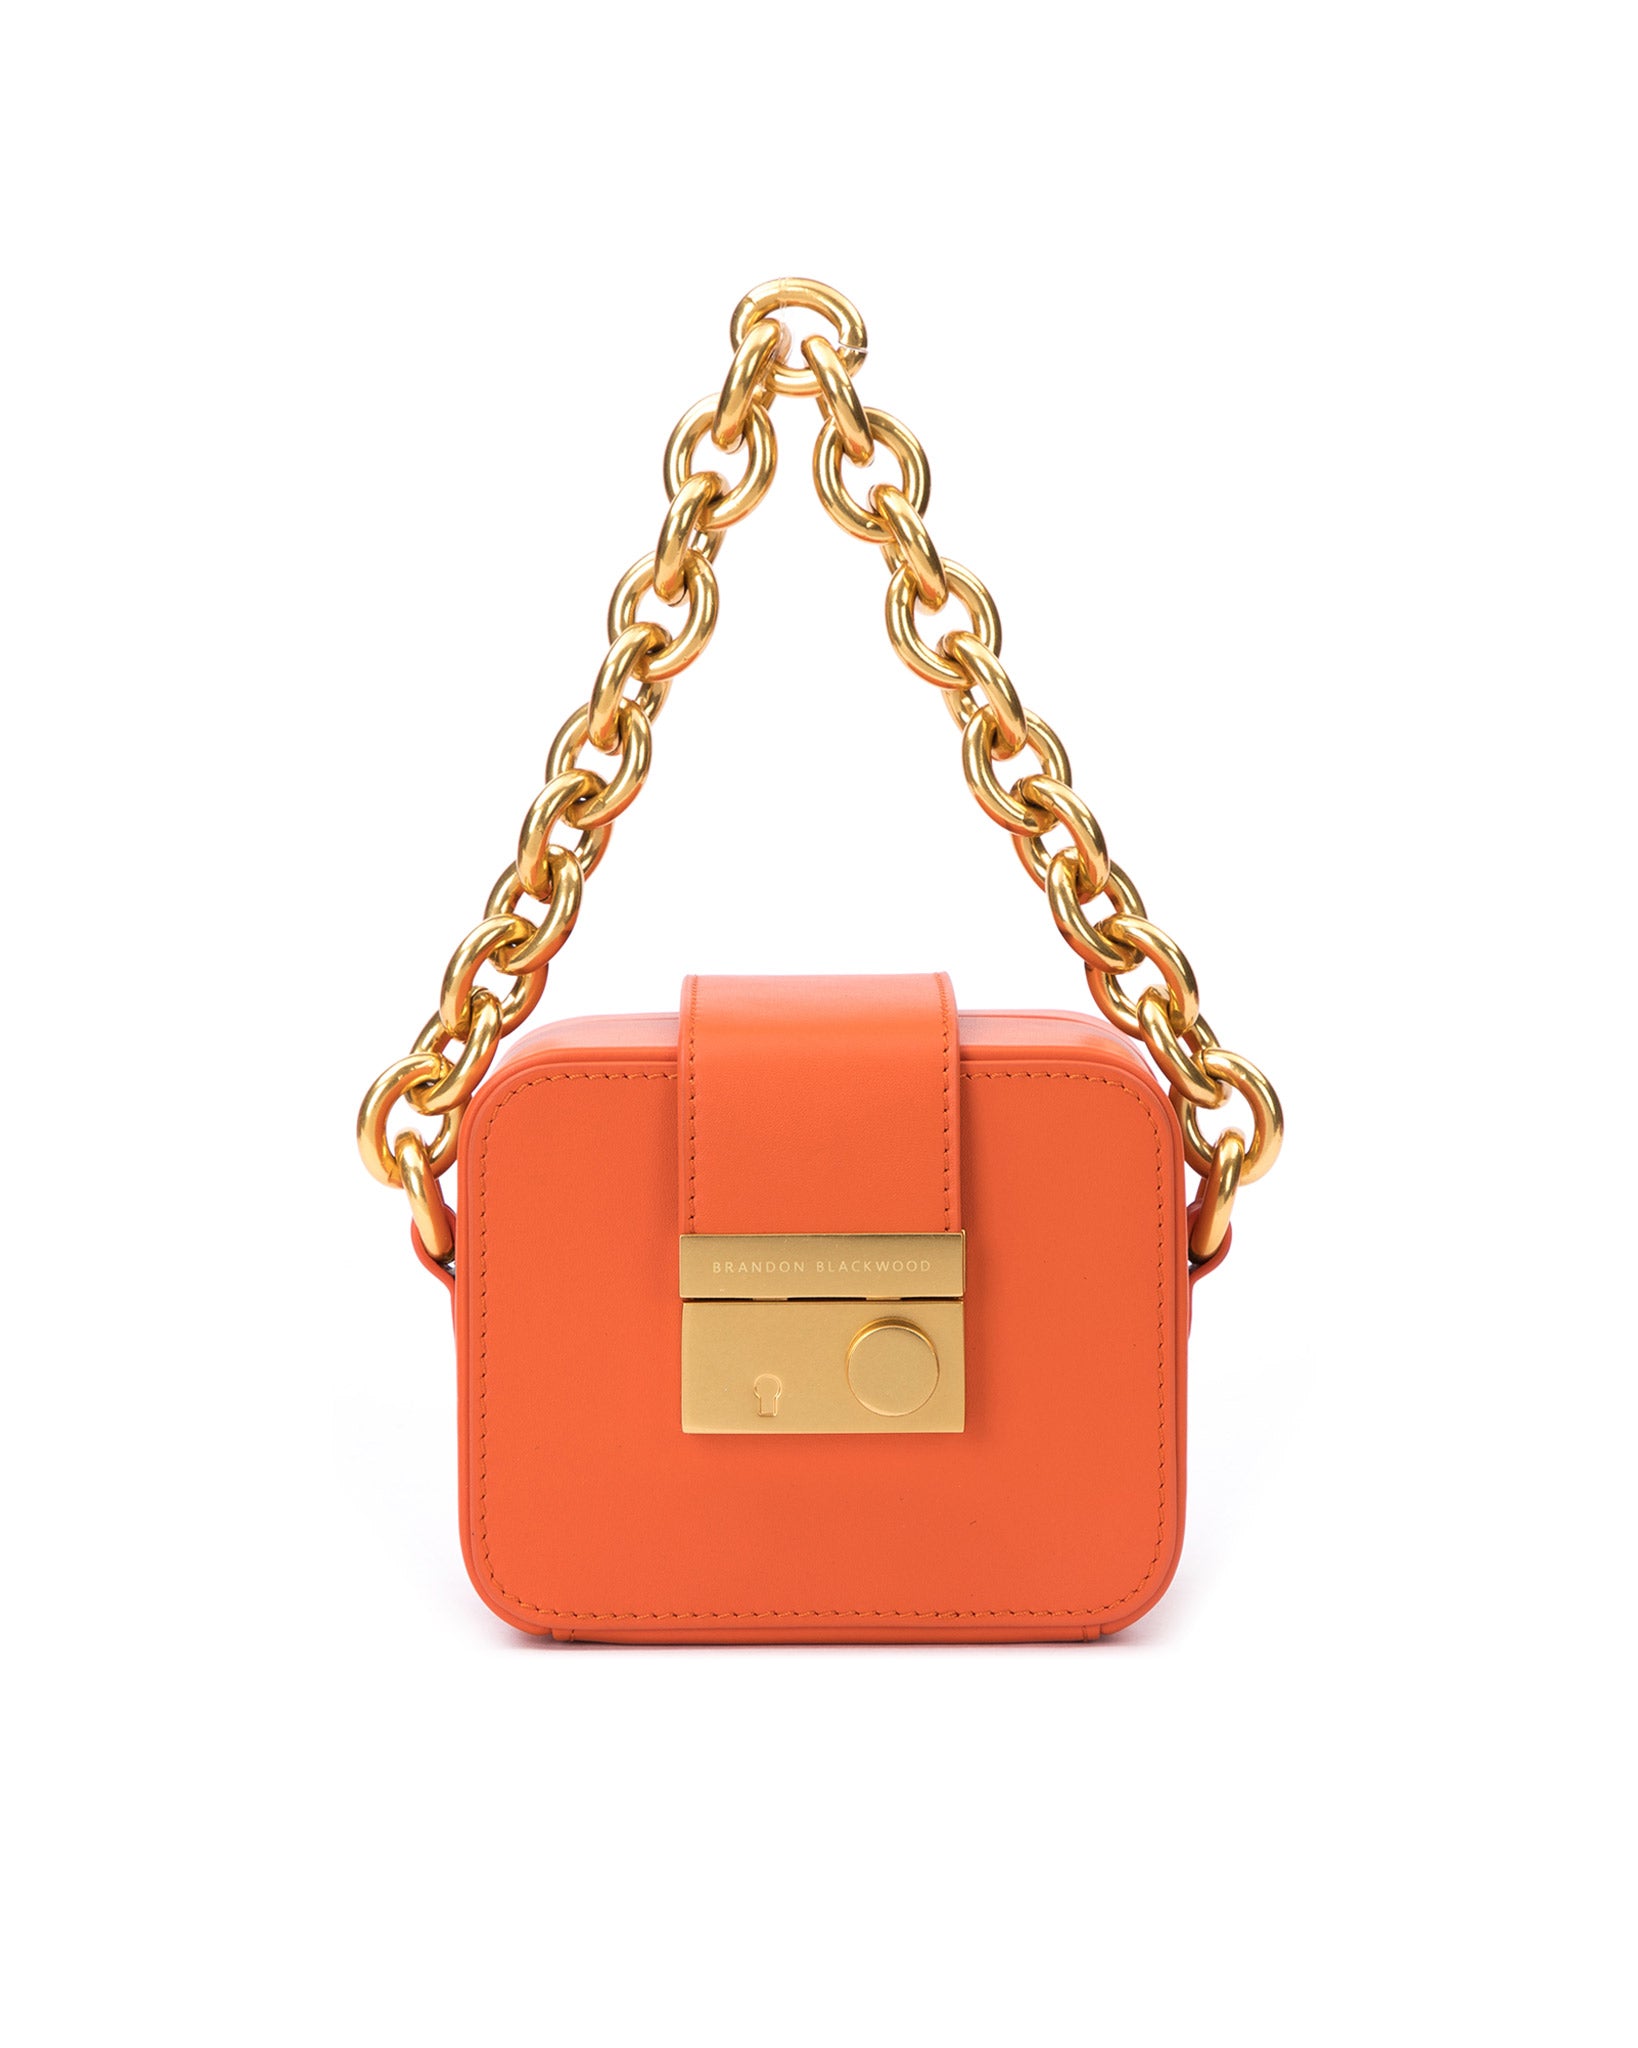 Buy the Kate Spade Smooth Leather Shoulder Bag Neon Orange